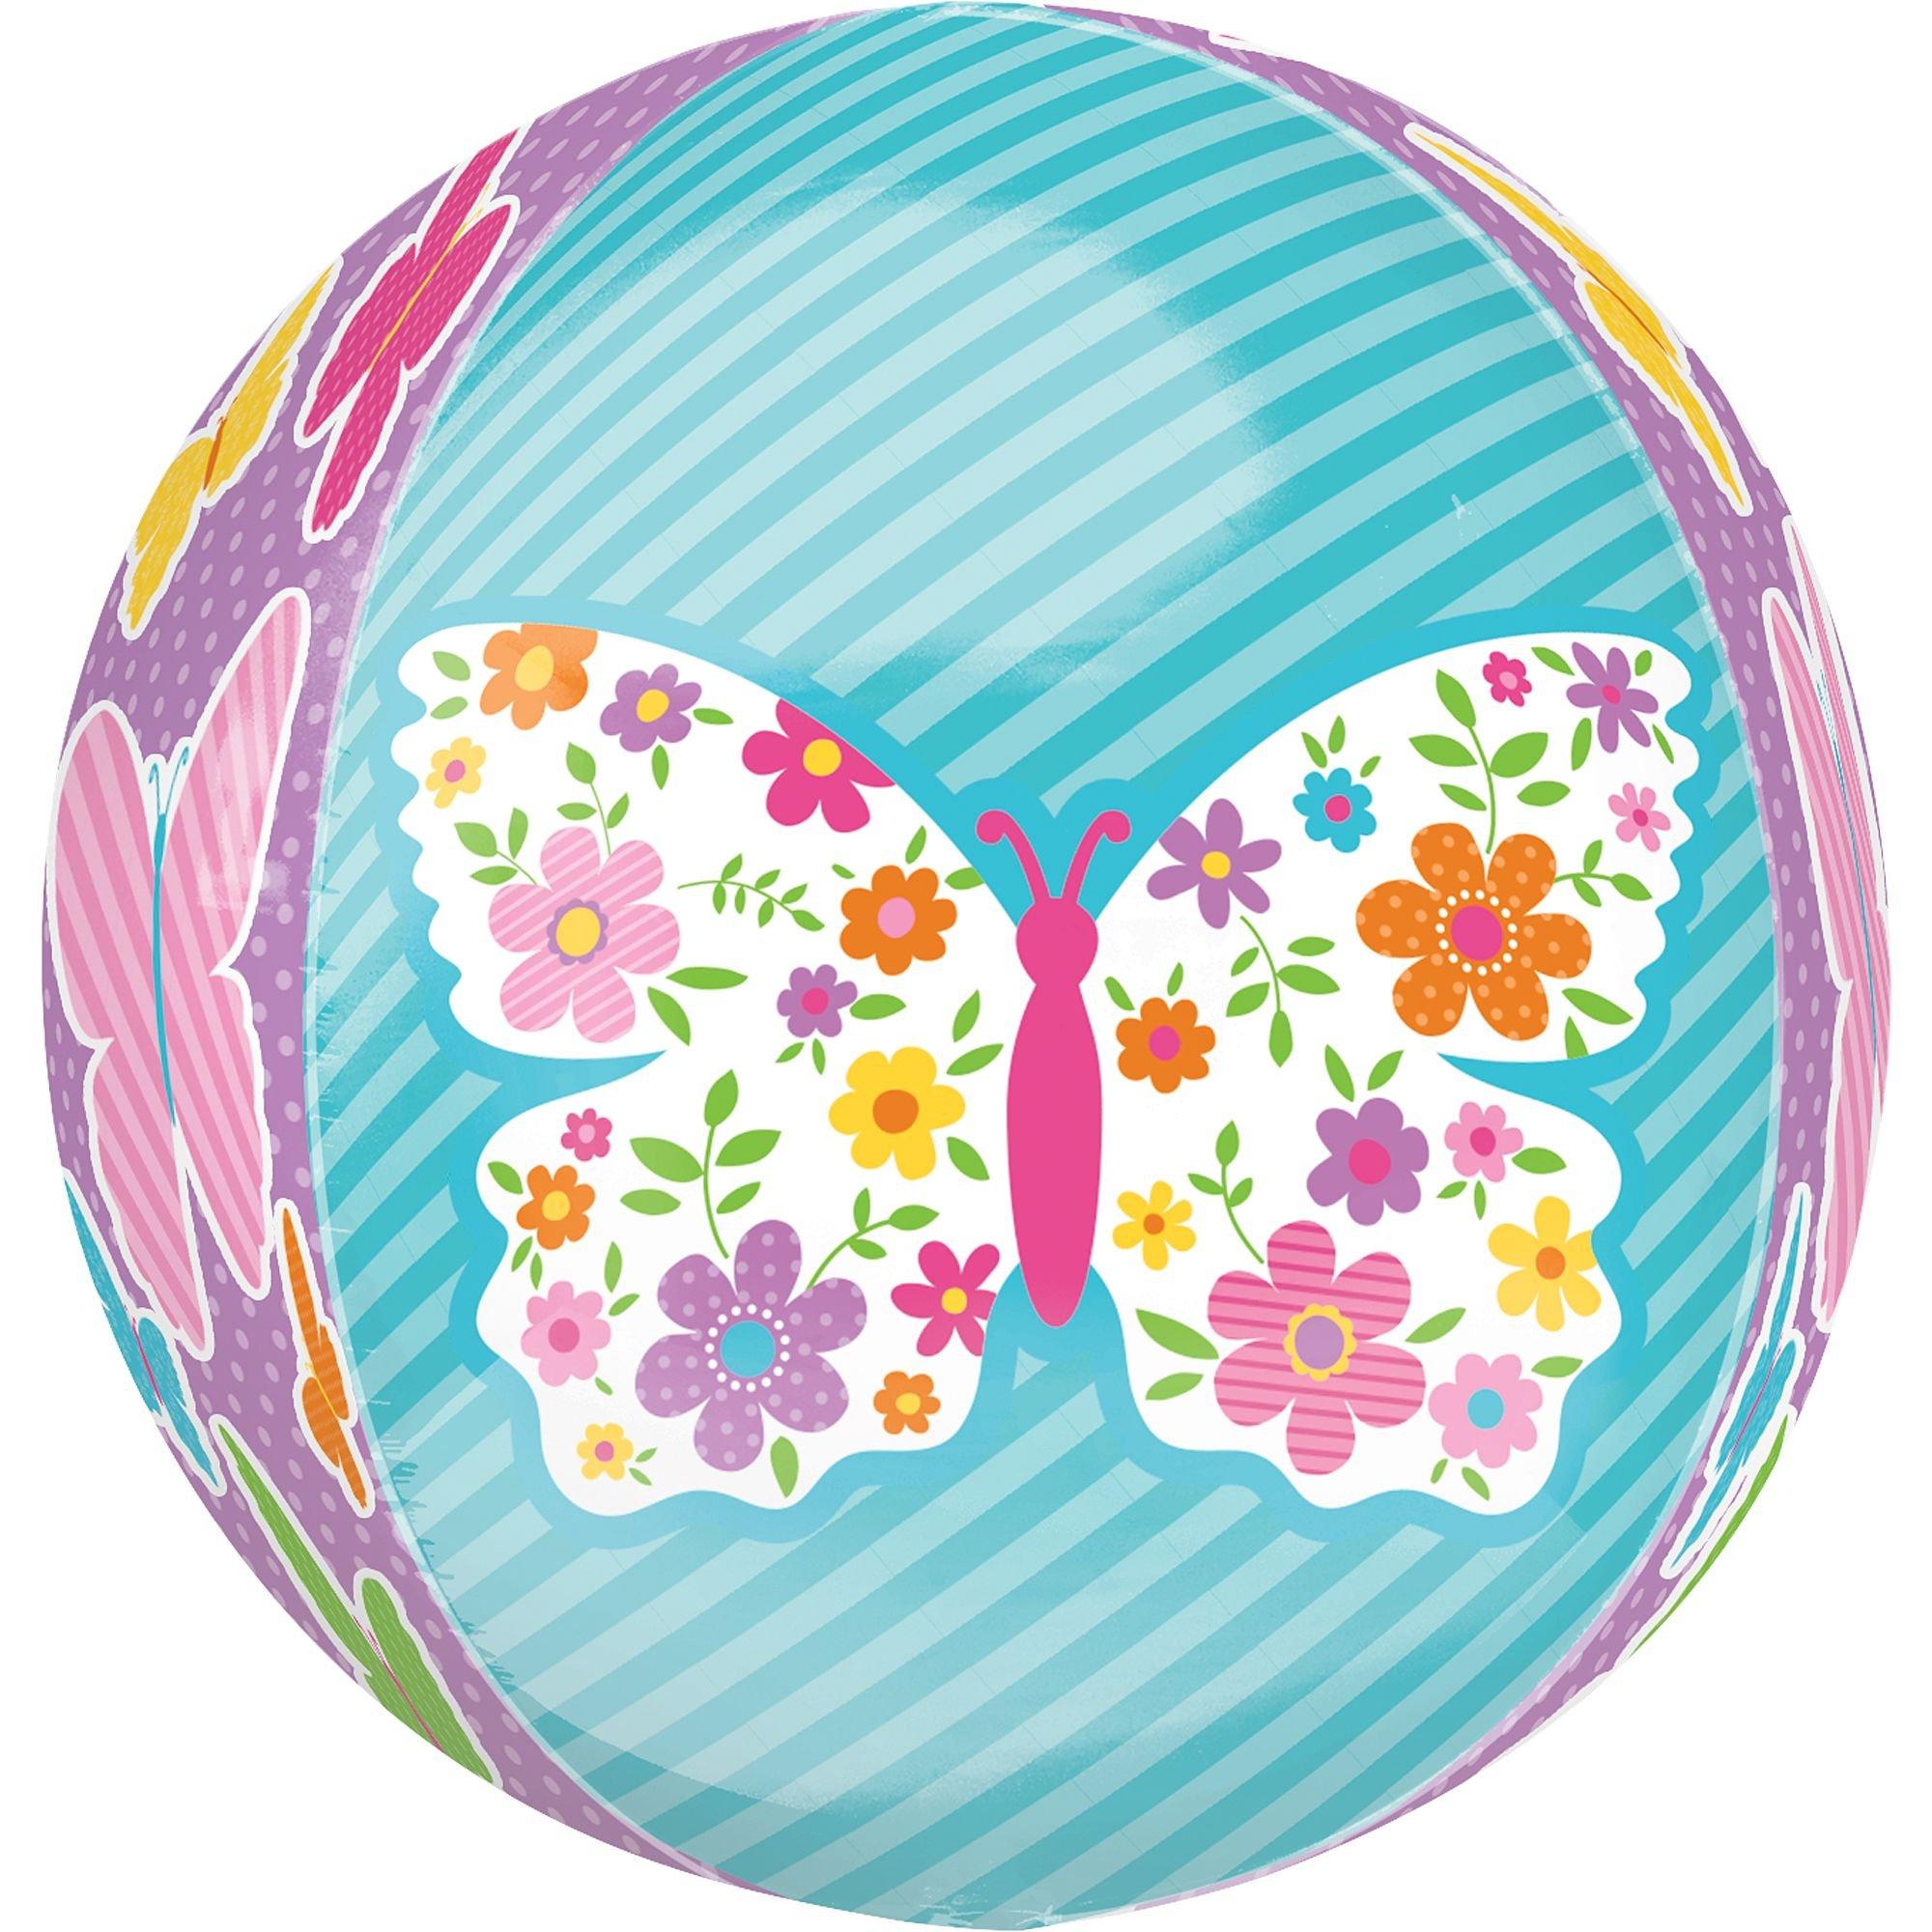 Spring Butterflies Balloon - Orbz, 15in